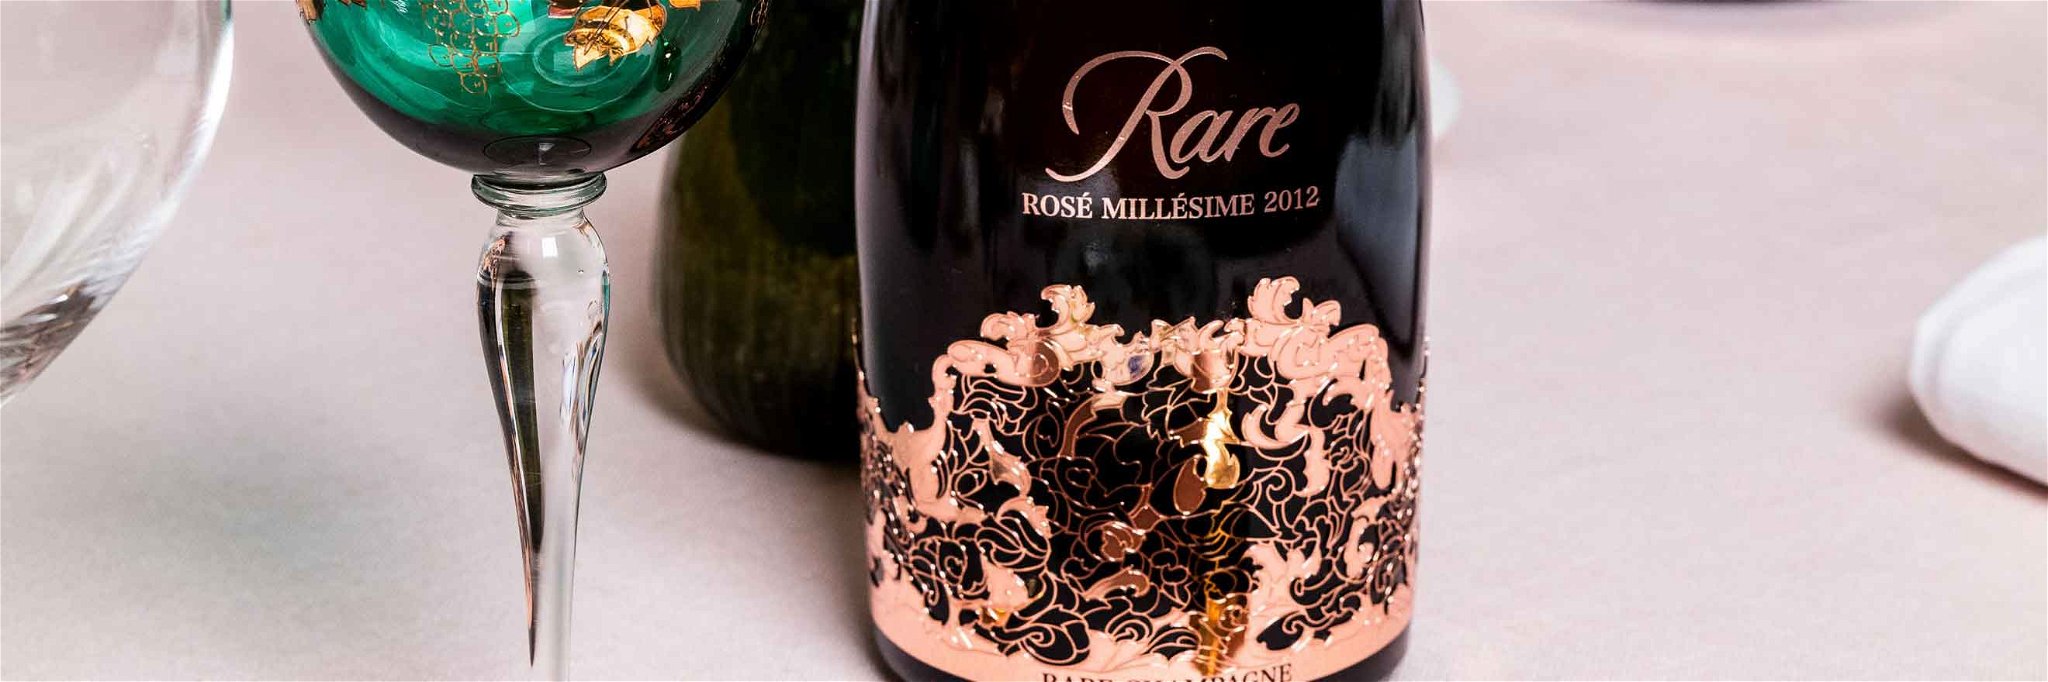 Champagne Rare Rosé Millésime 2012&nbsp;